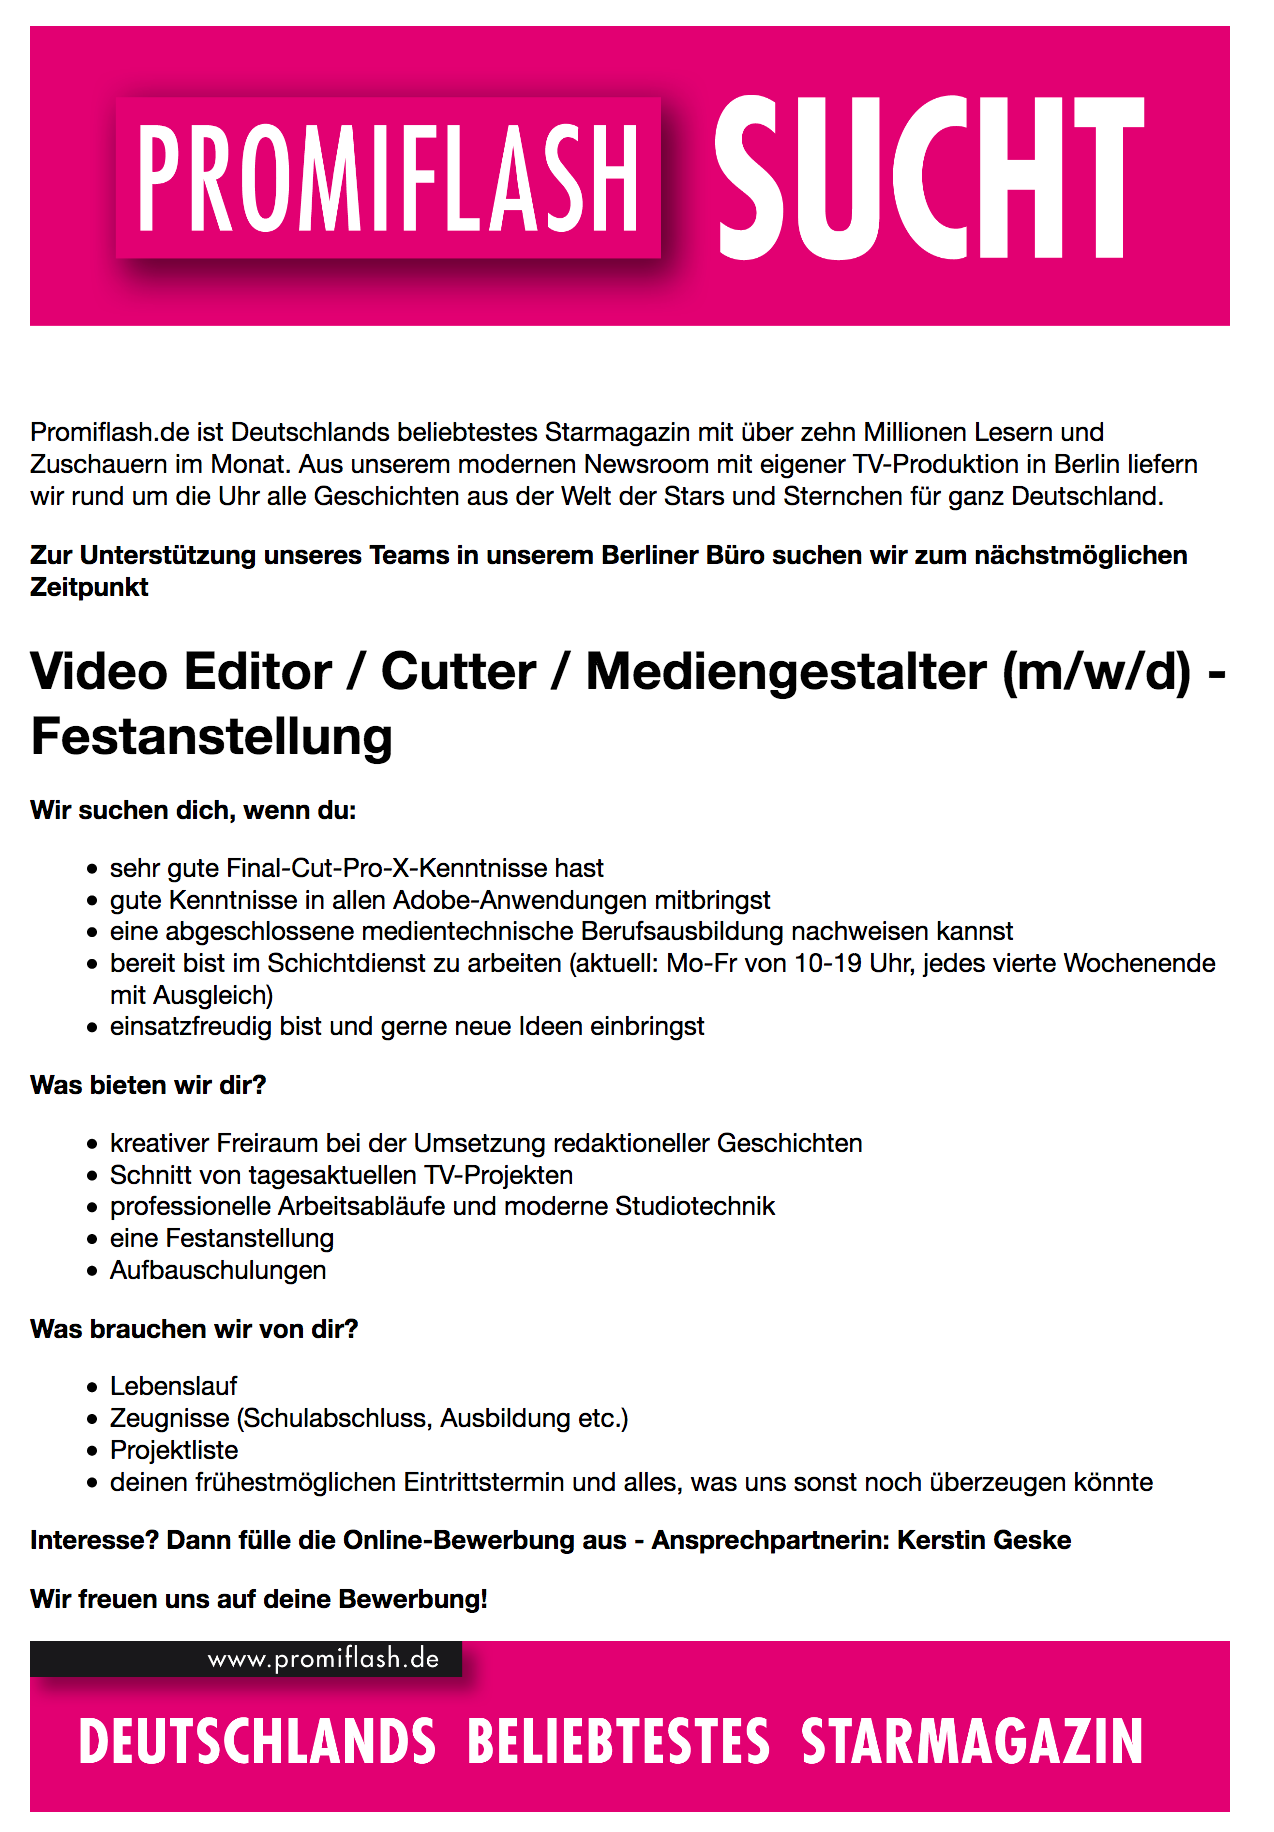 Video Editor / Cutter / Mediengestalter (m/w/d) - Festanstellung